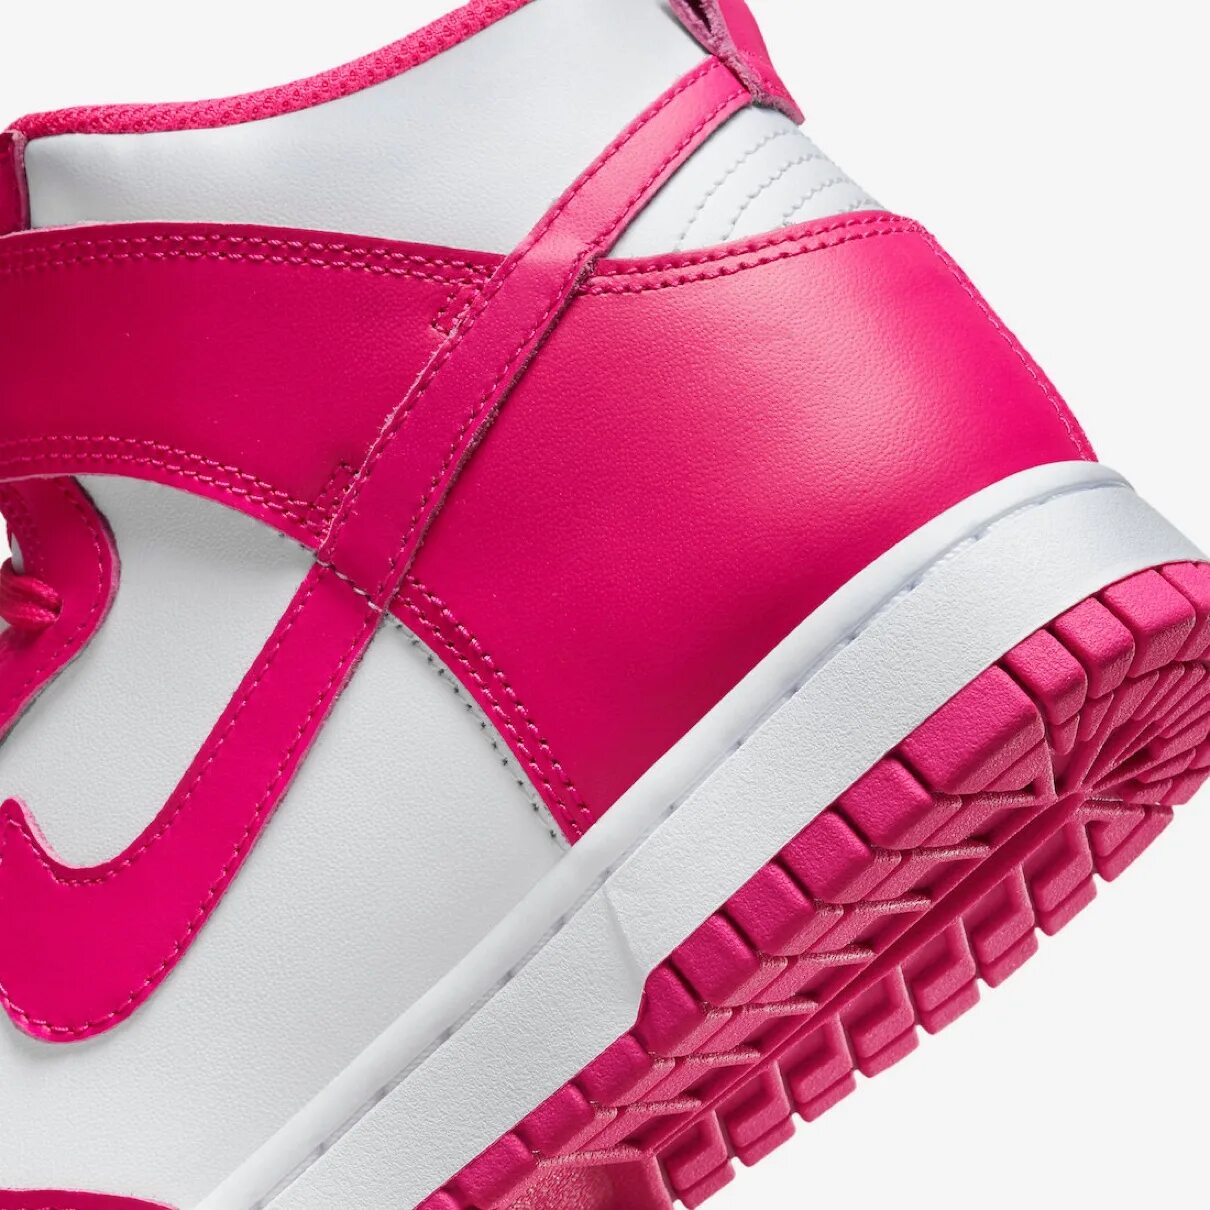 Nike dunk розовые. Nike Dunk Prime Pink. Nike Dunk High Wmns. Nike Dunk High Pink Prime. Nike Dunk High розовые.